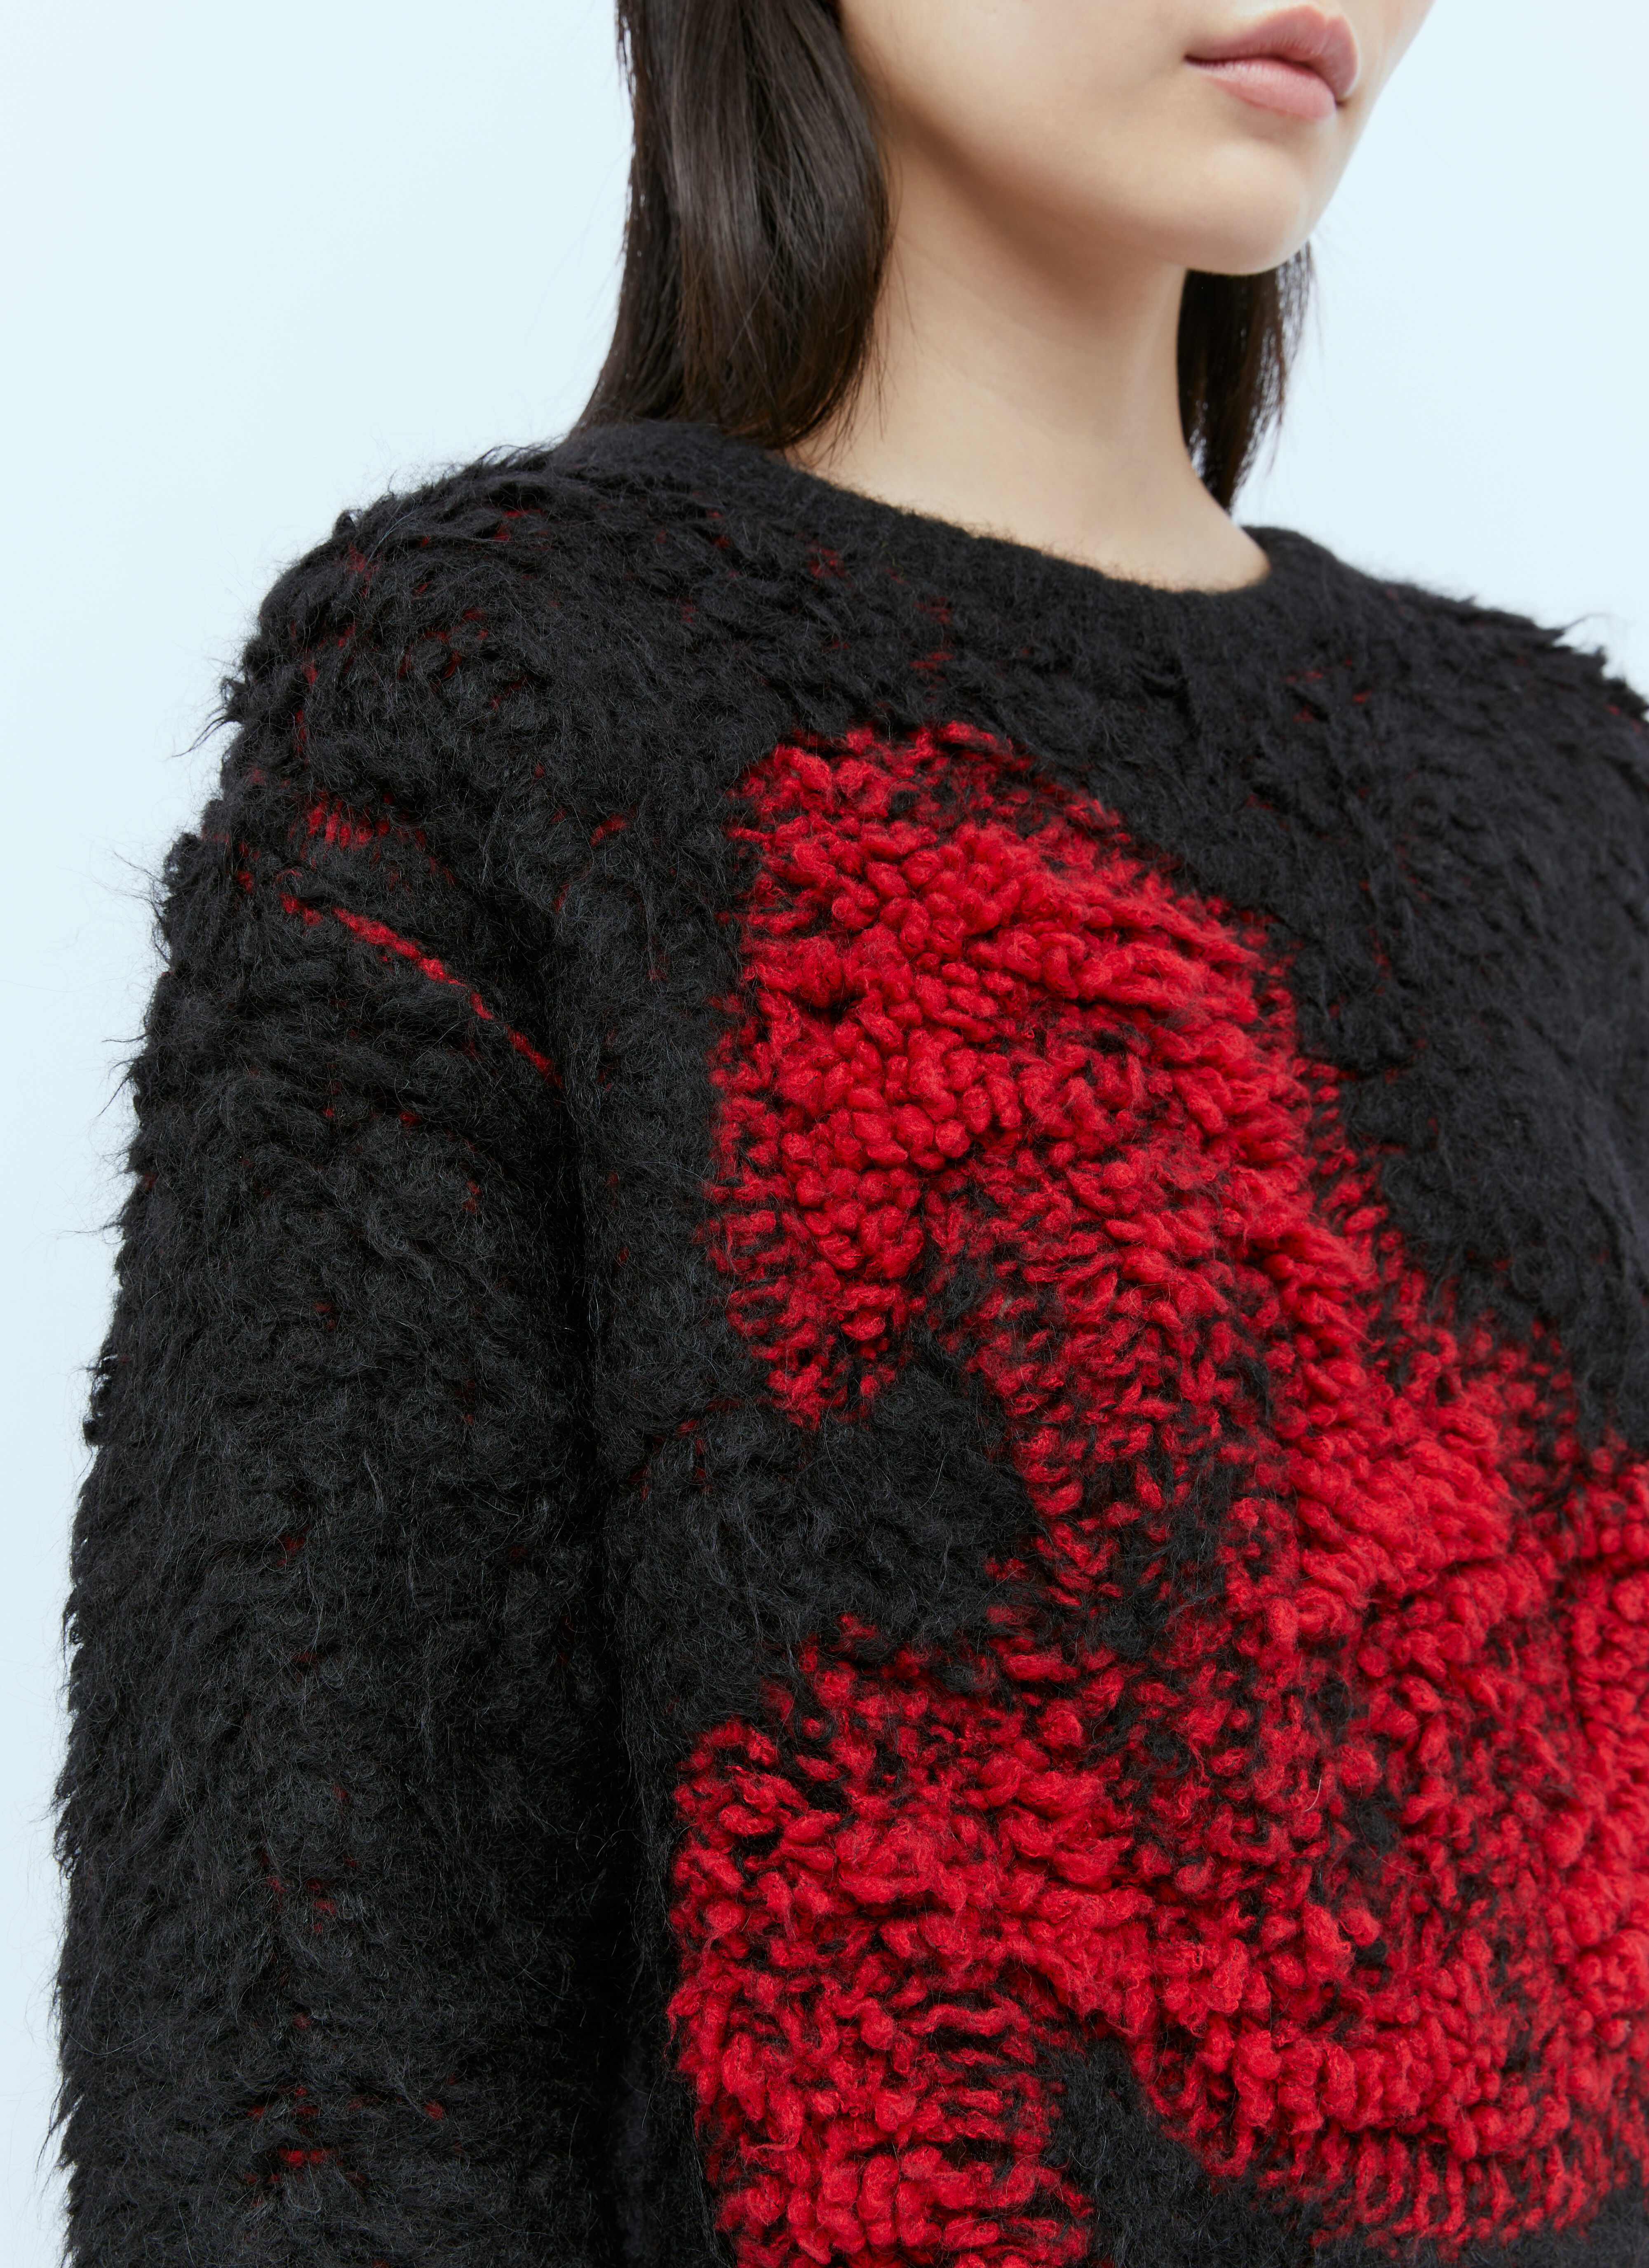 Stella McCartney Pixel Horse Jacquard Knit Sweater in Black | LN-CC®